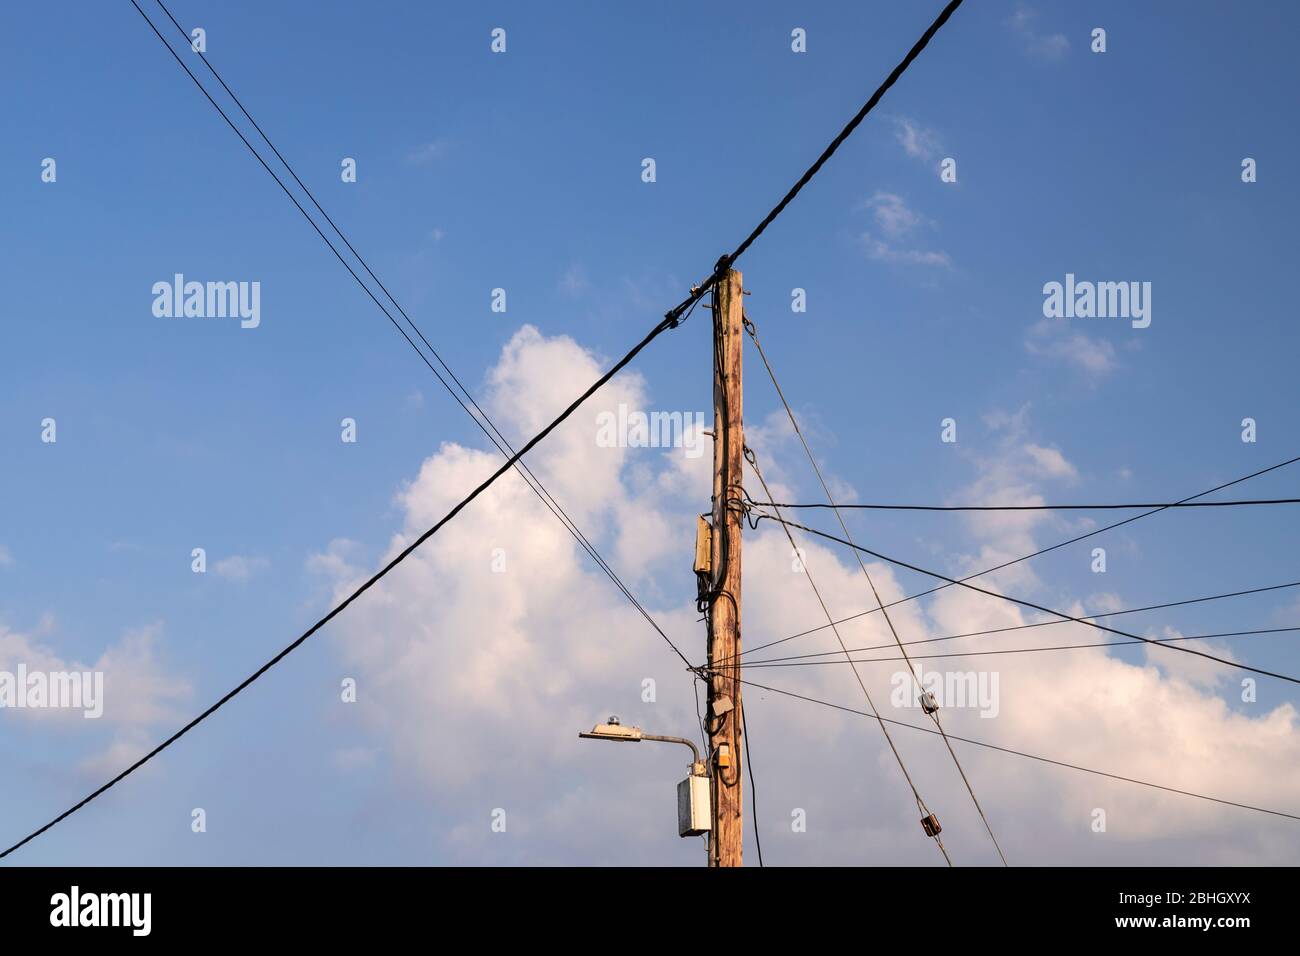 Holztelegraphenmast mit Strom- und Telekommunikationskabel Stockfoto